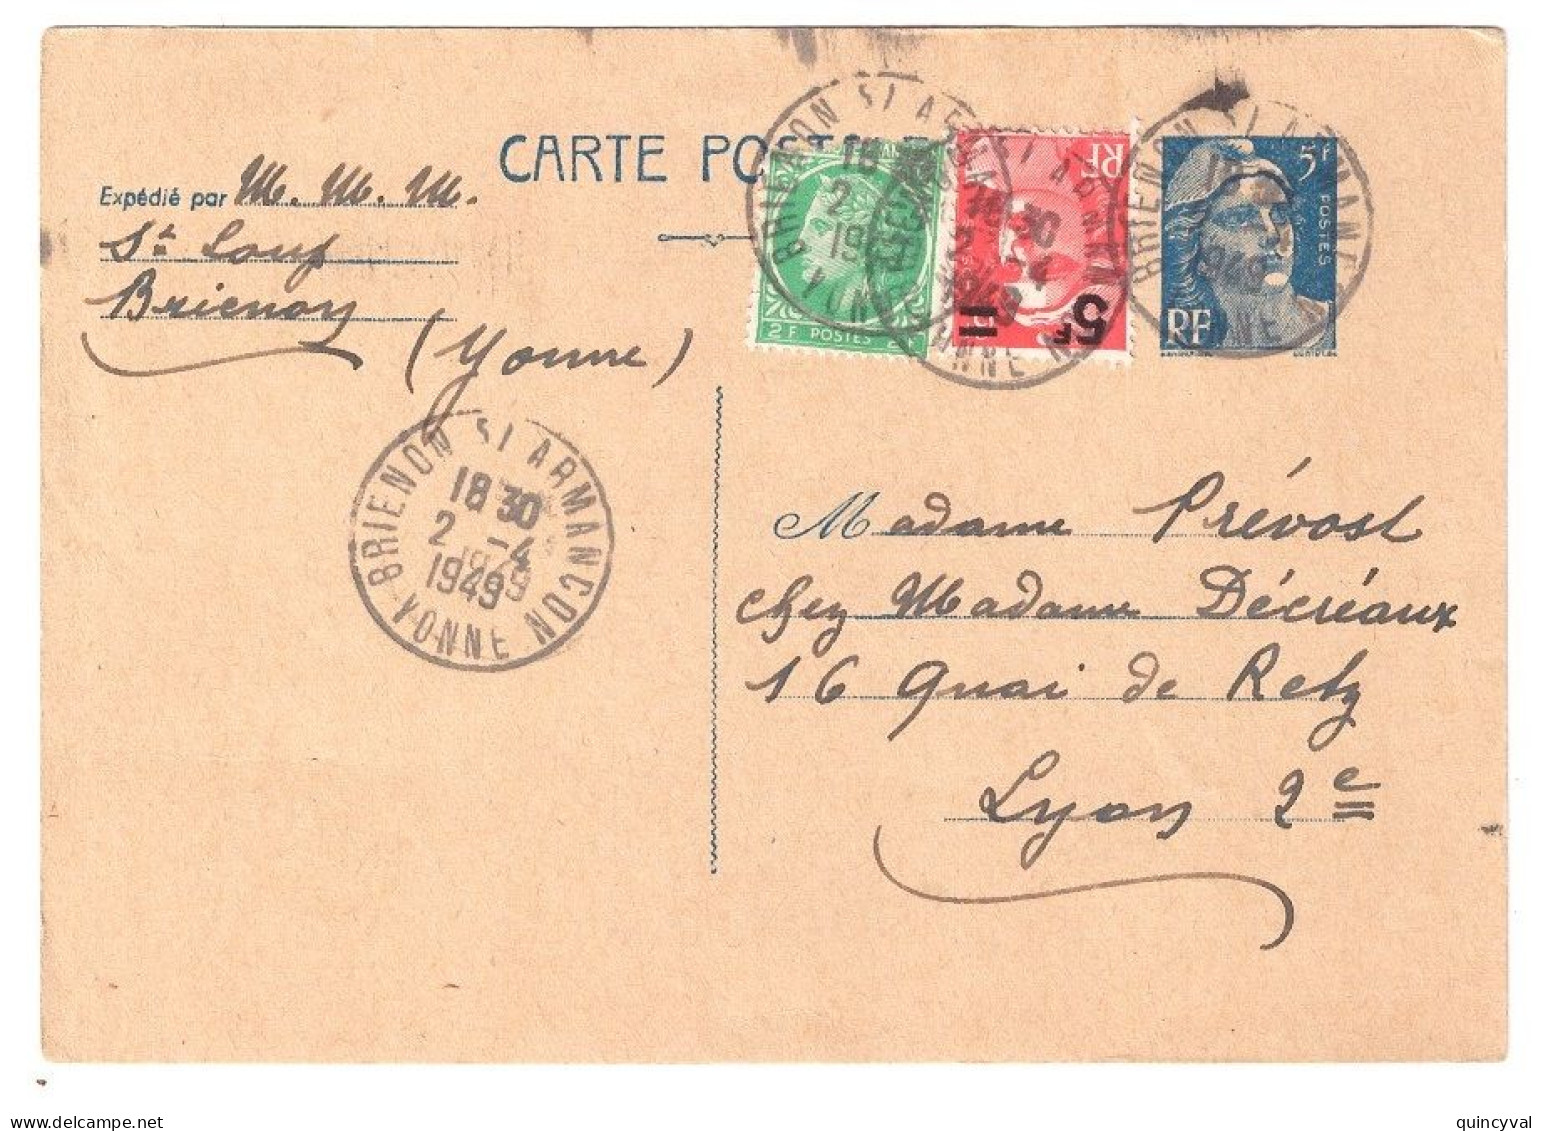 BRIENON SUR ARMANCON Yonne Carte Postale Entier 5F Gandon Complément Mazelin Yv 680 827 719B-CP1 Ob 2 4 1949 - Standard Postcards & Stamped On Demand (before 1995)